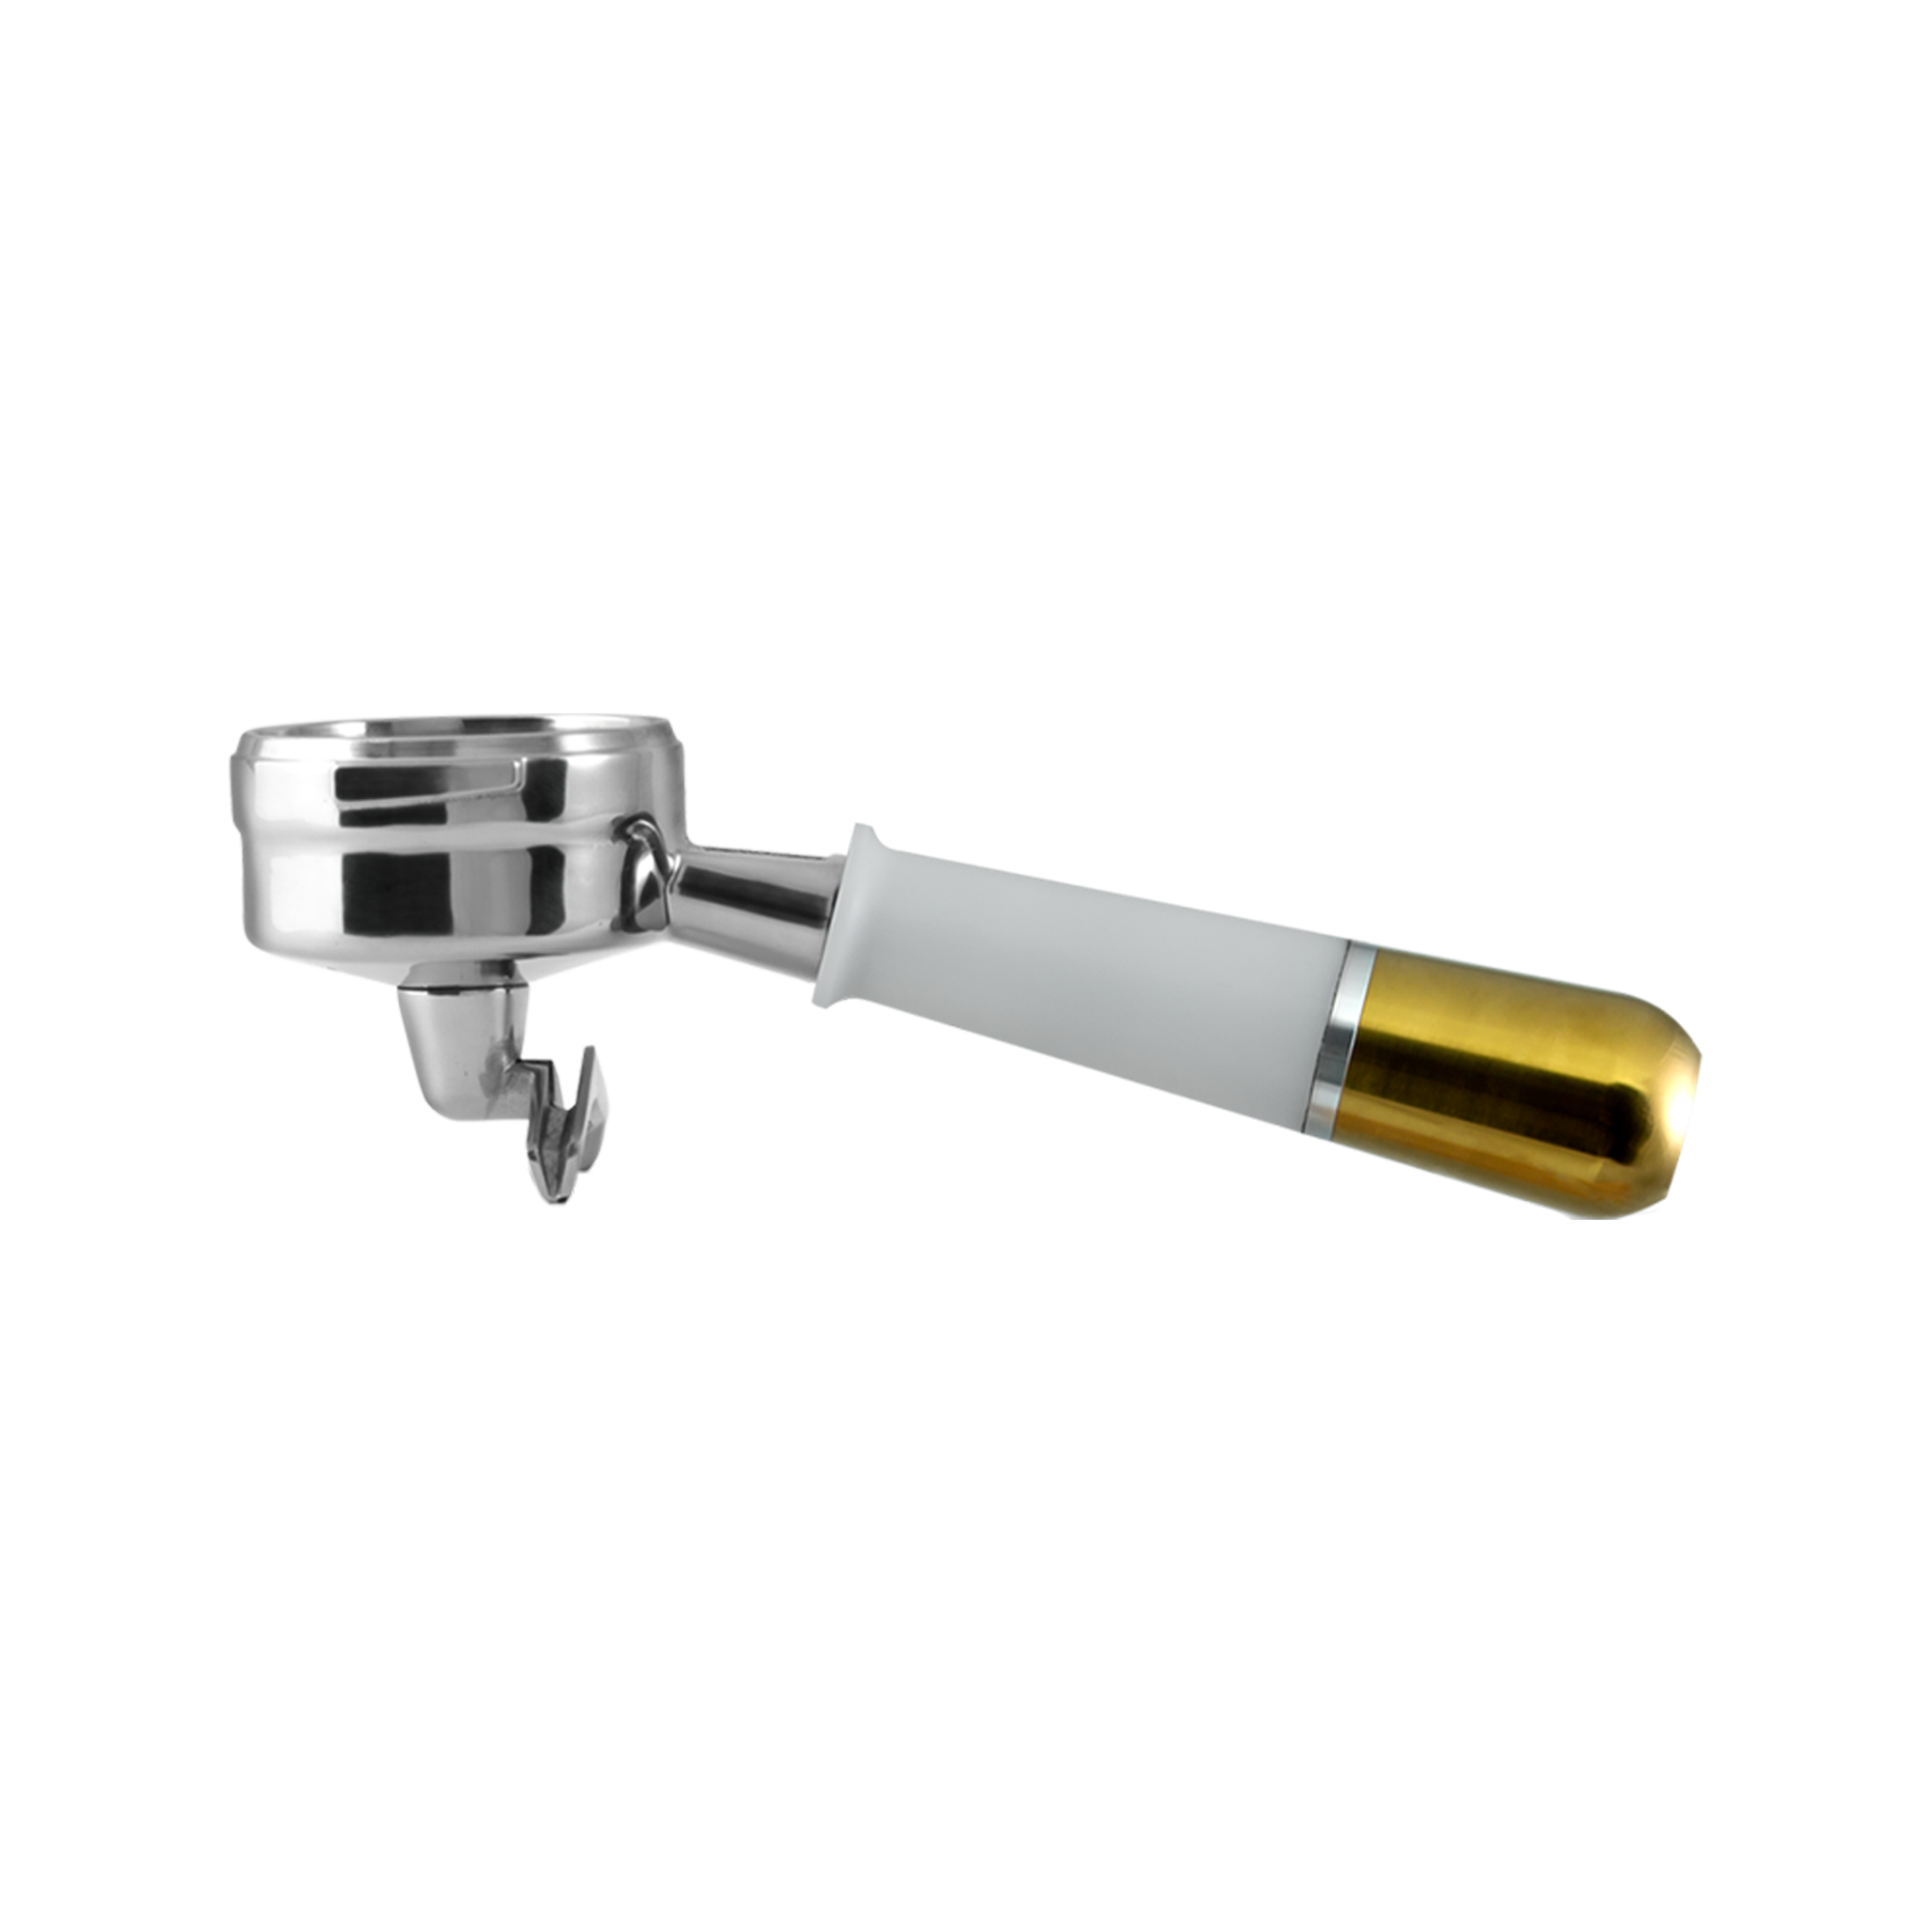 Double Spout Portafilter 54mm (Breville) - White & Gold